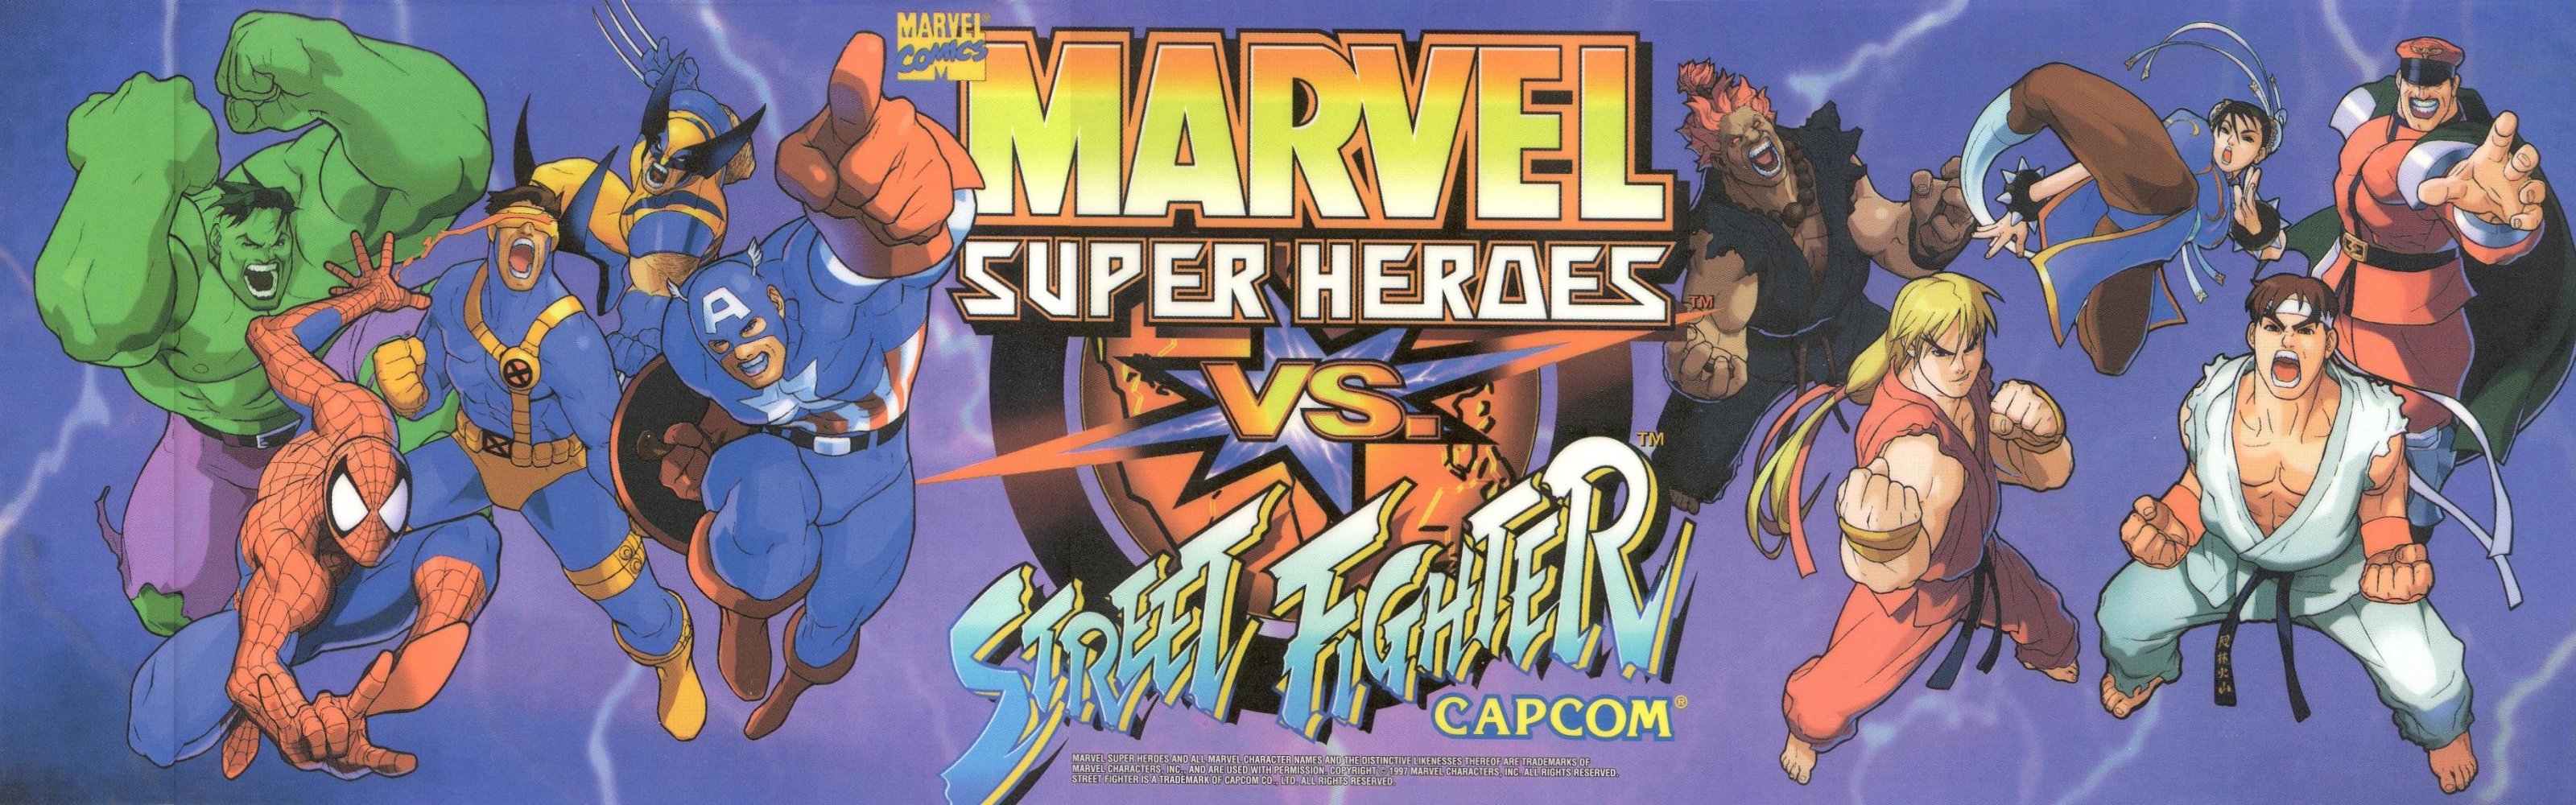 Marvel Super Heroes Vs. Street Fighter -Ryu Playthrough - Part 1 